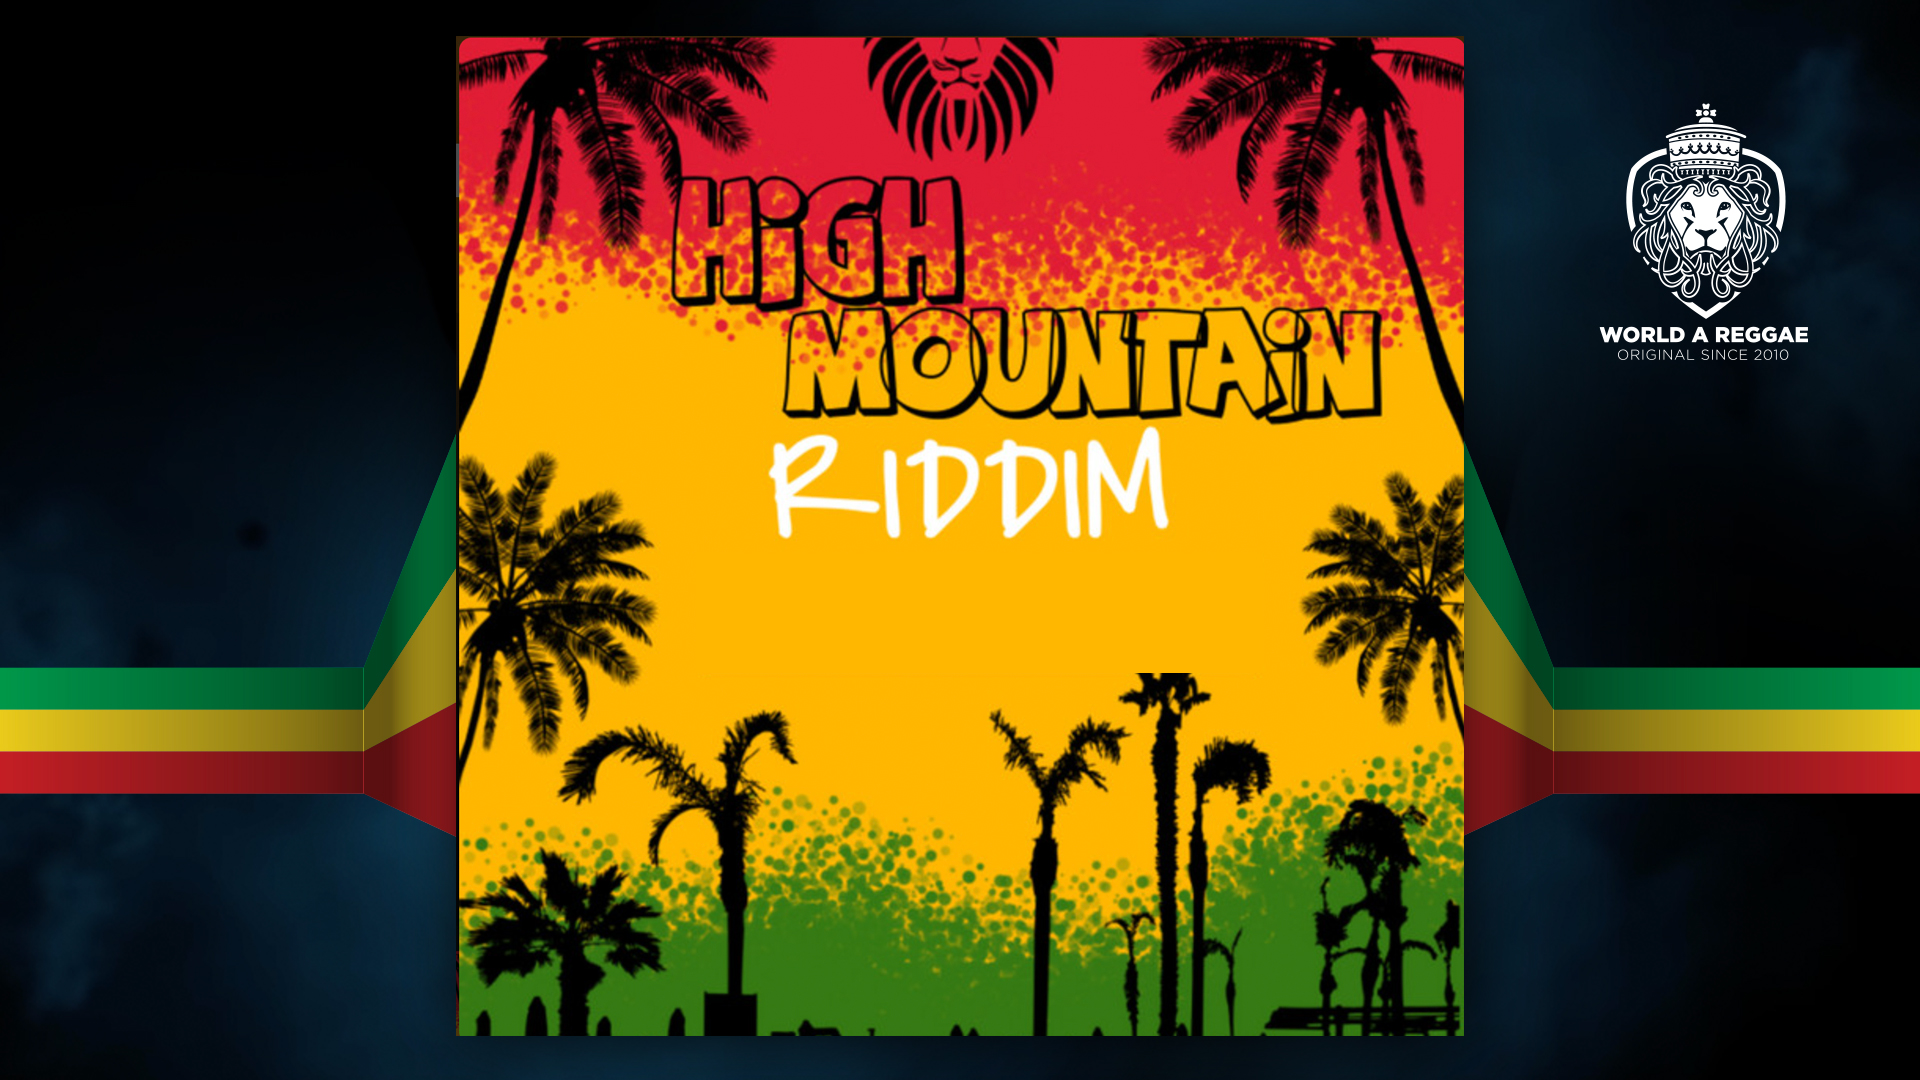 High Mountain Riddim